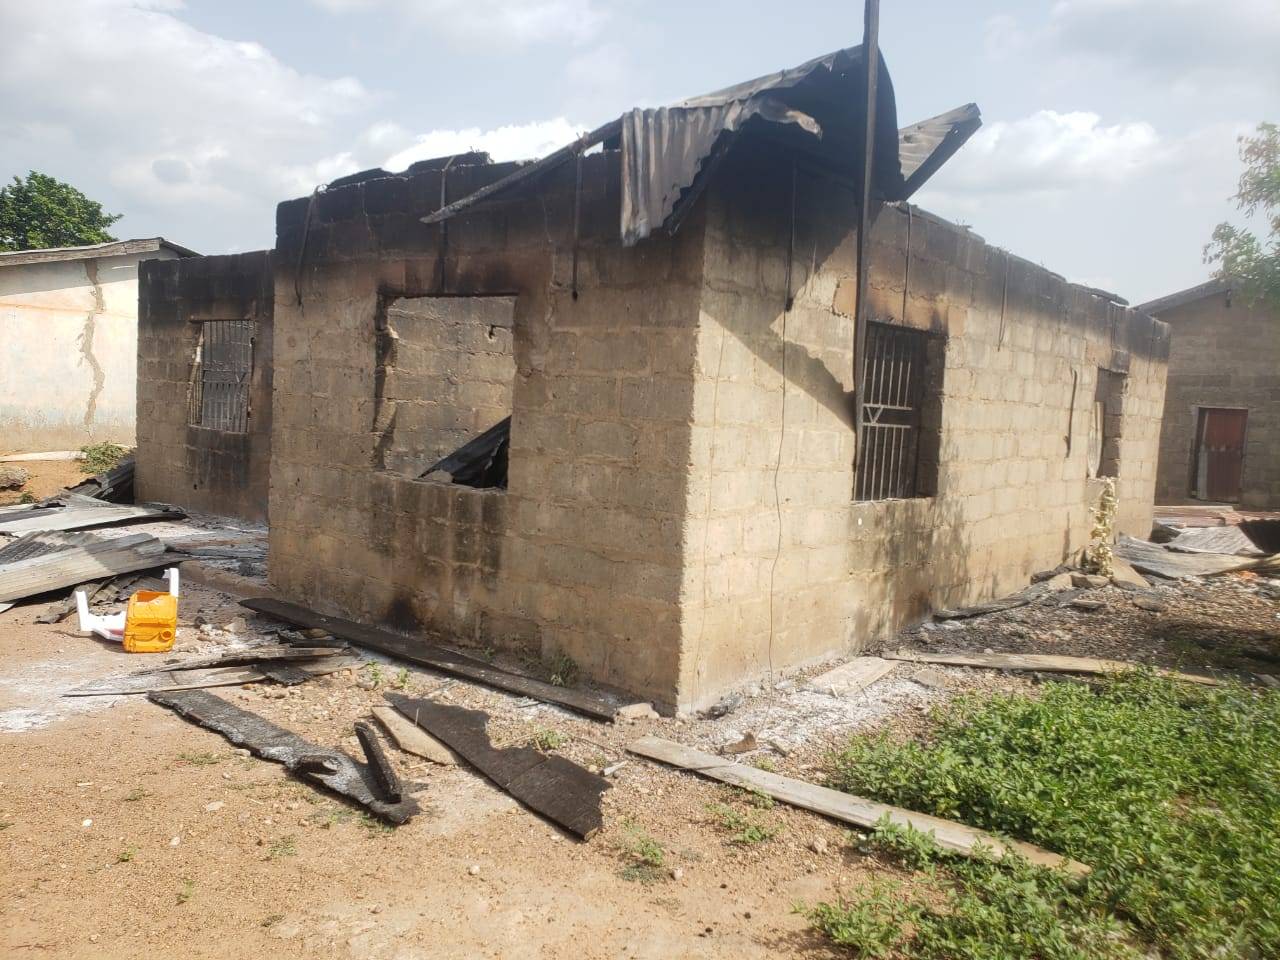 Ekiti Islamic cleric allegedly sets his wifeâs house ablaze for refusing to participate in late night prayer